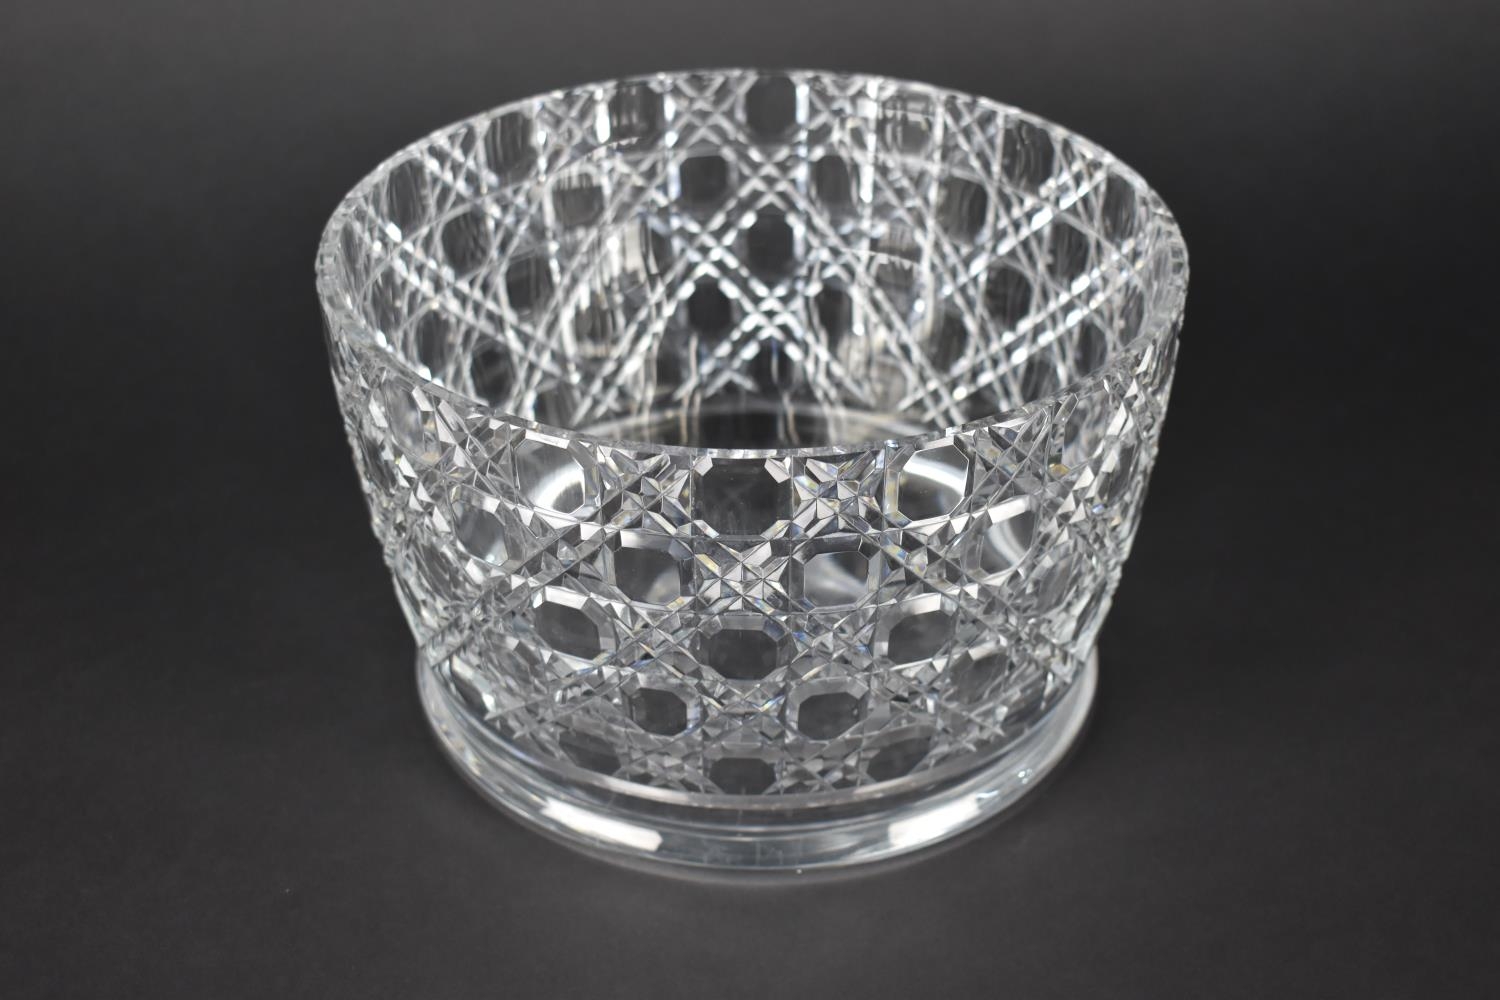 A Large Nice Quality Hobnail Cut Glass Bowl with Polished Pontil Base, 14.5cm high